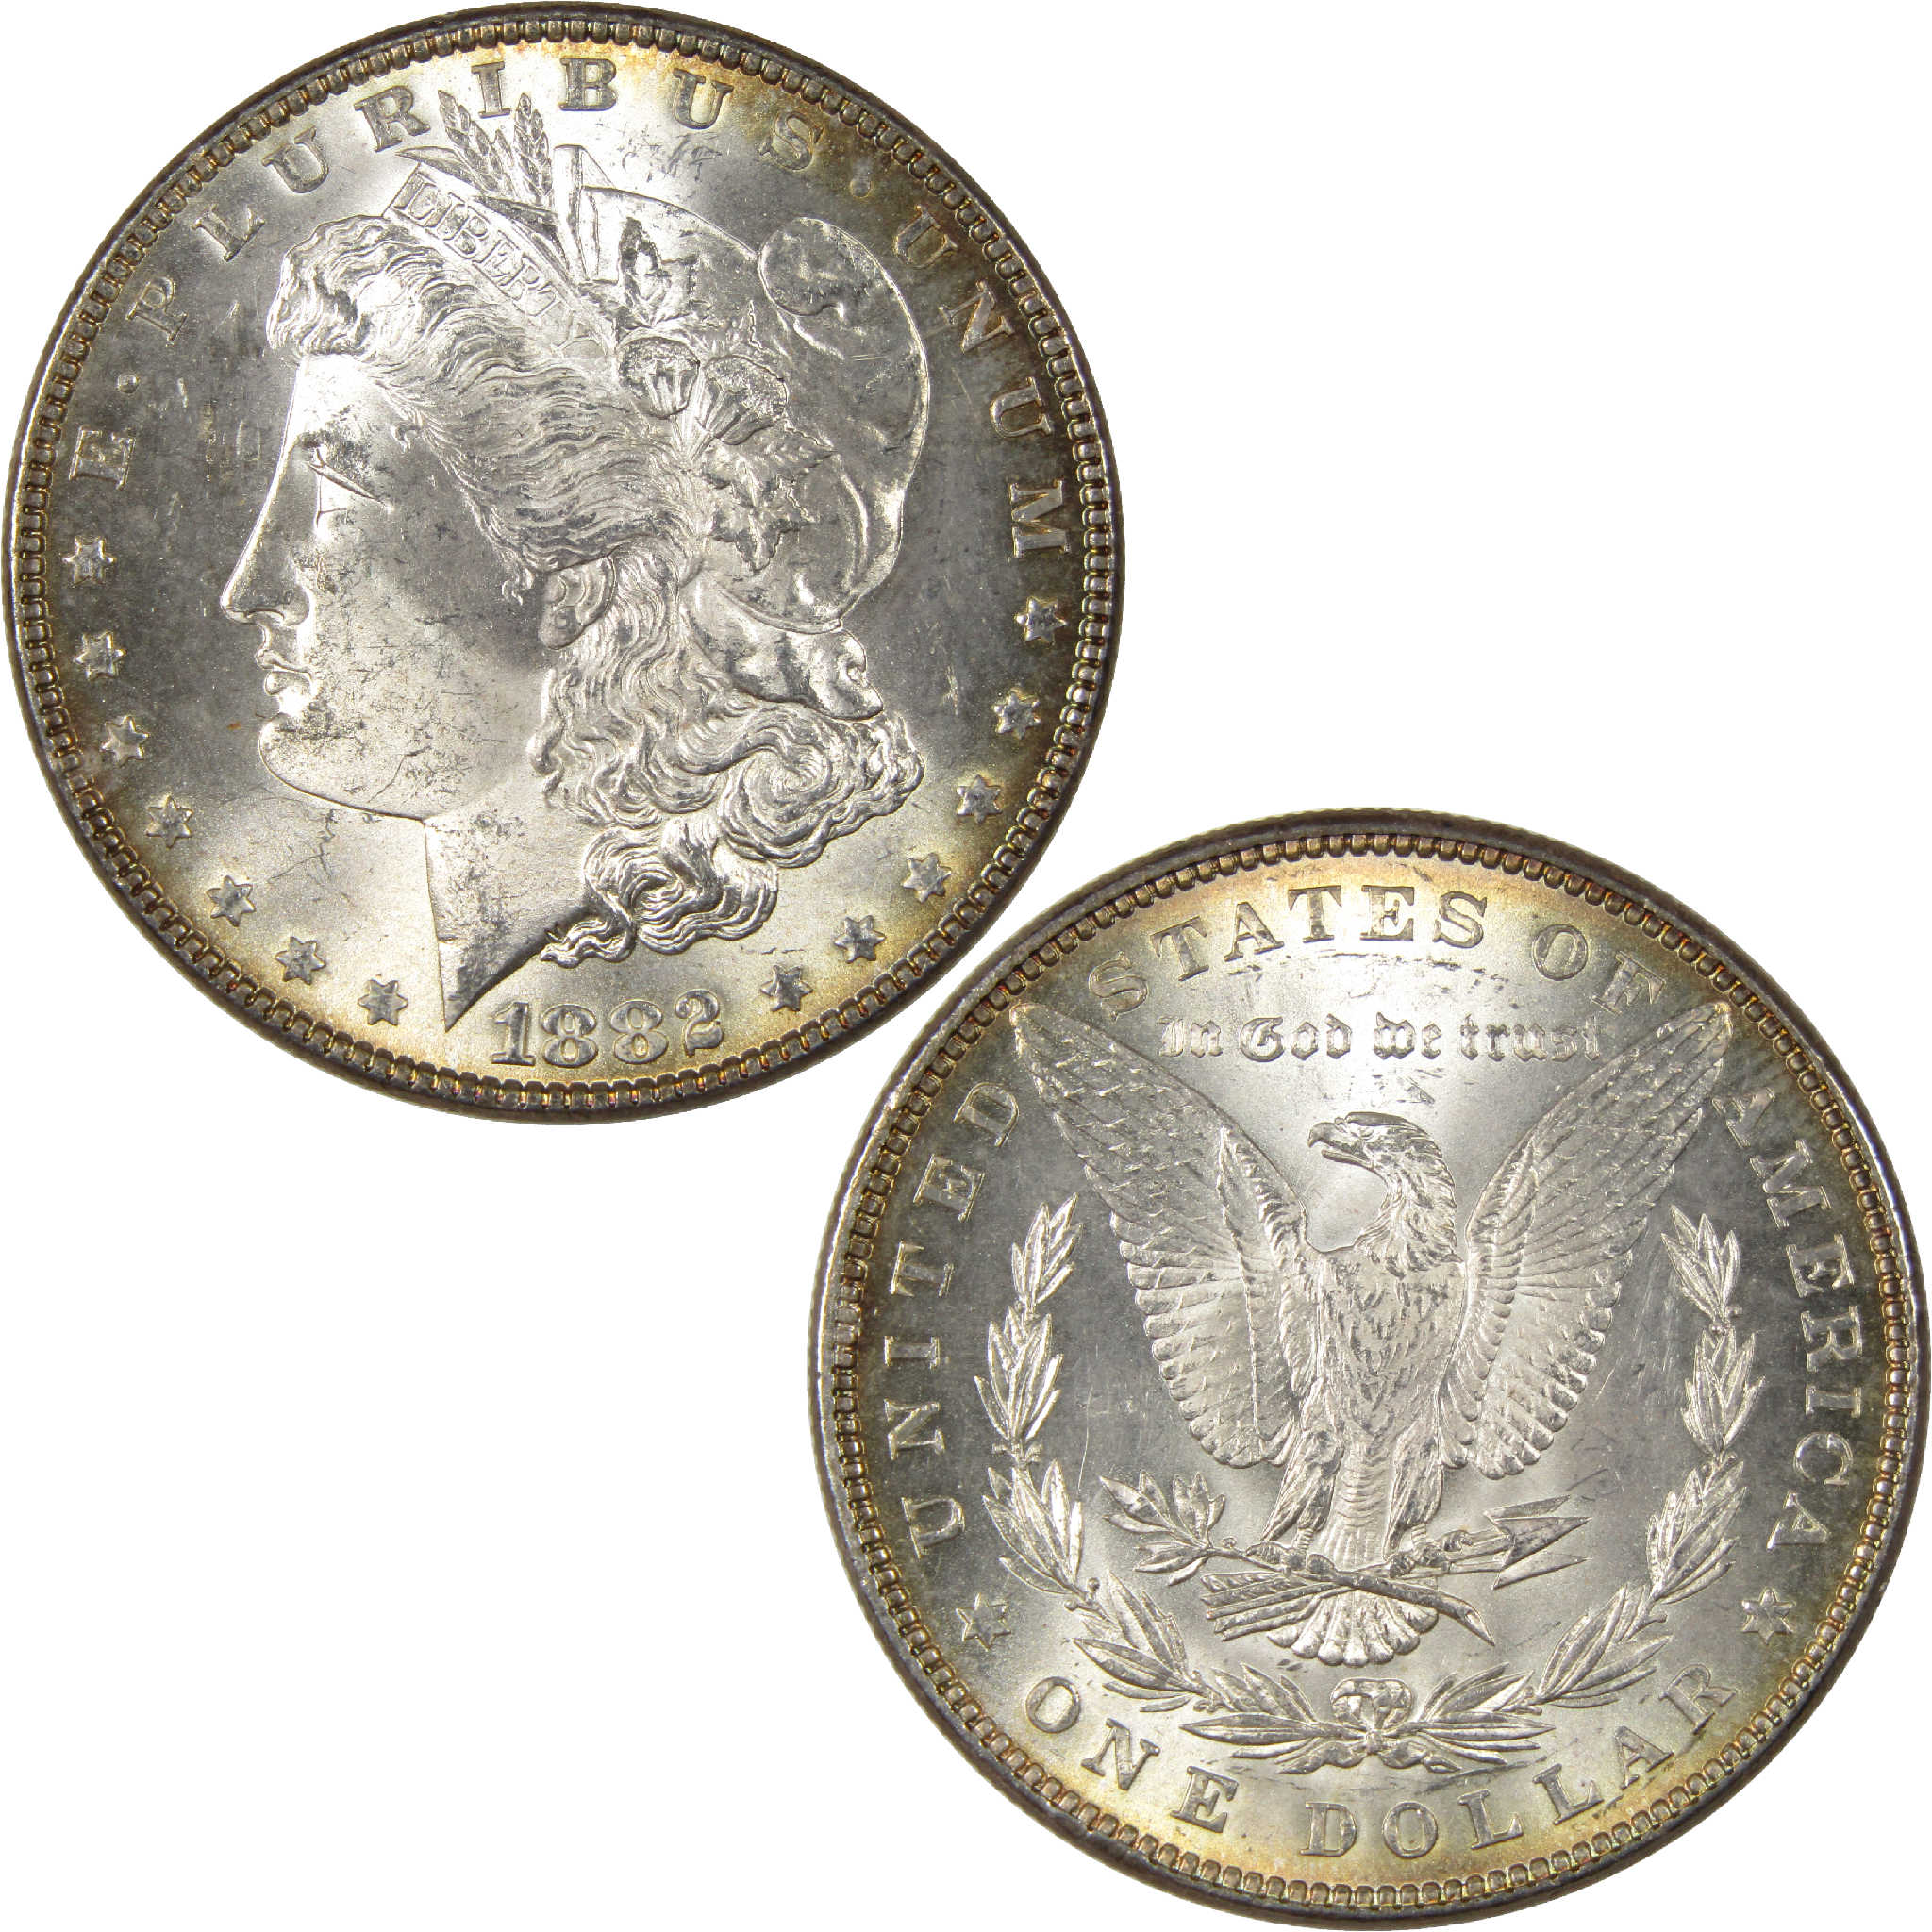 1882 Morgan Dollar BU Choice Uncirculated Silver $1 Coin - Morgan coin - Morgan silver dollar - Morgan silver dollar for sale - Profile Coins &amp; Collectibles